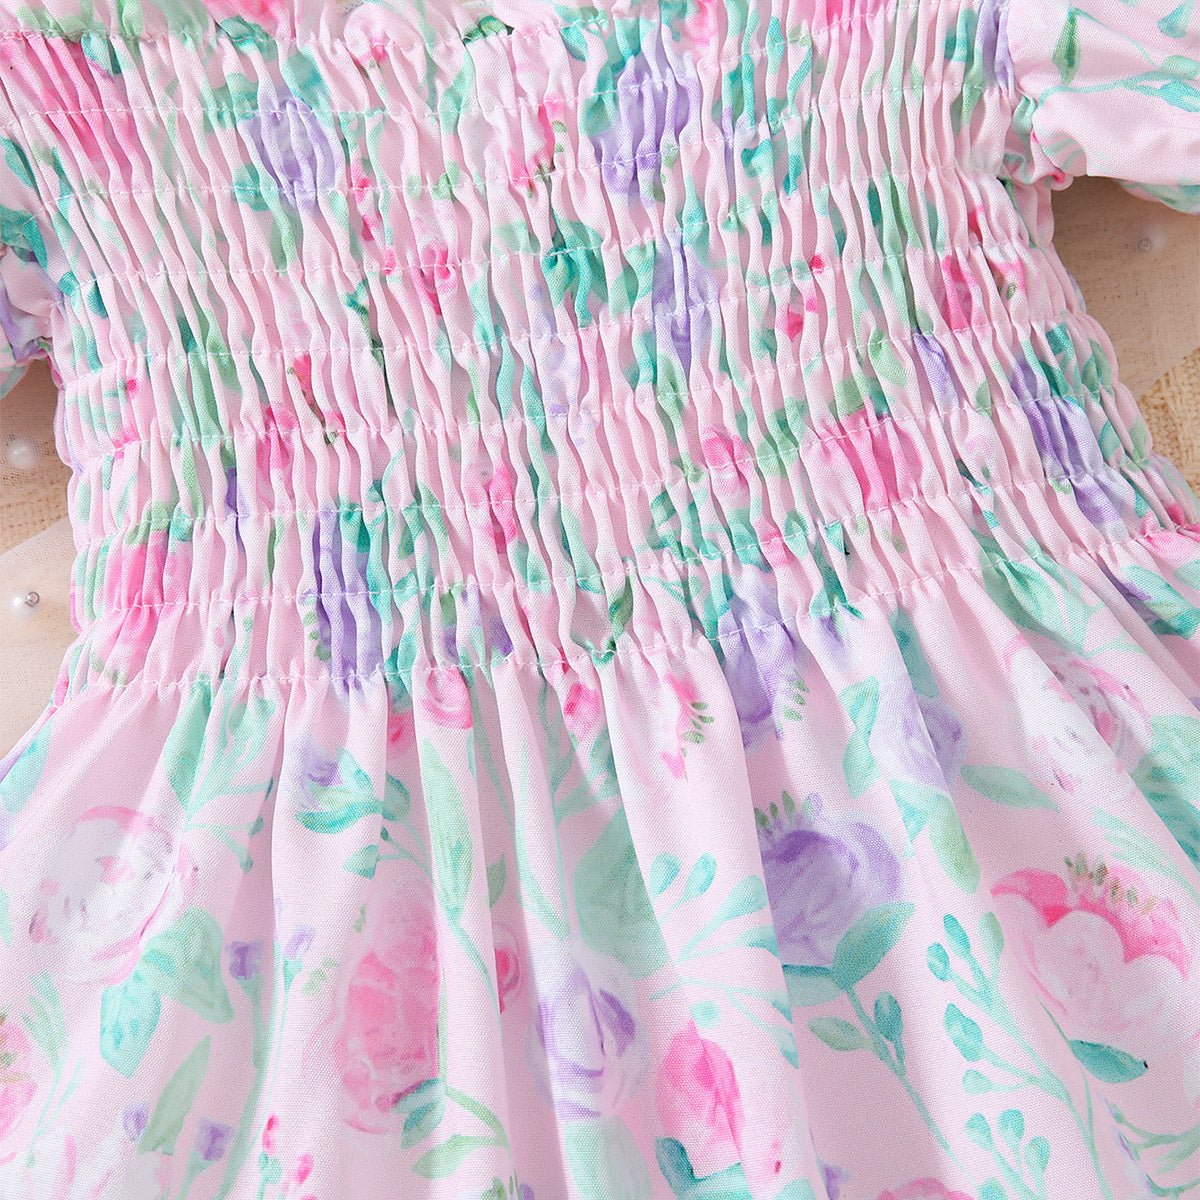 Children’s Girls Floral Ruffle Trim Smocked Dress